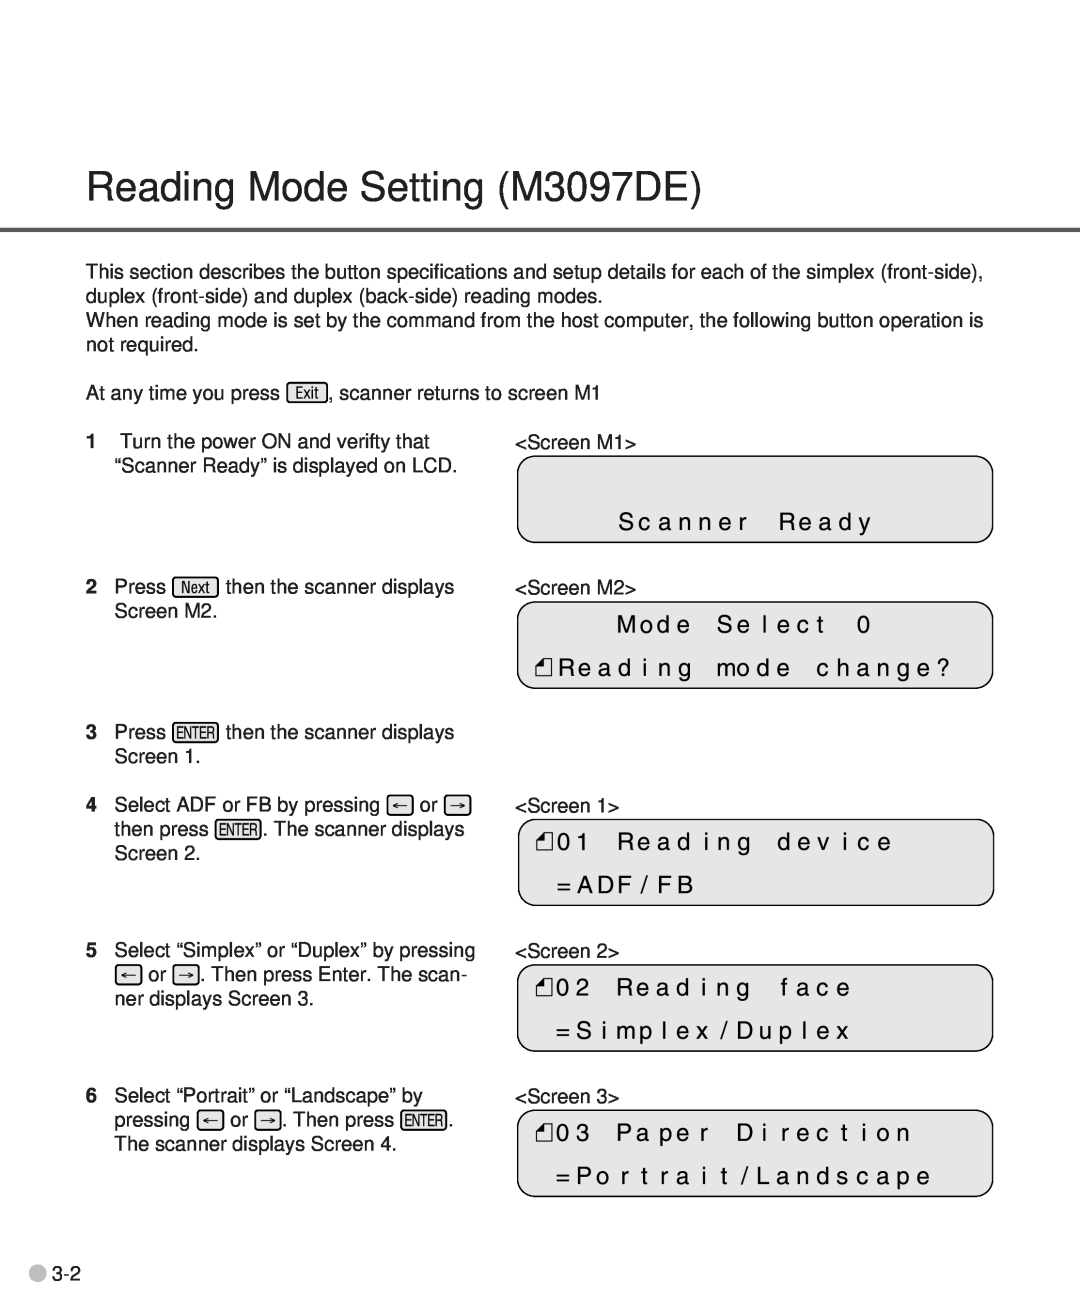 Fujitsu M3097DG manual Reading Mode Setting M3097DE 